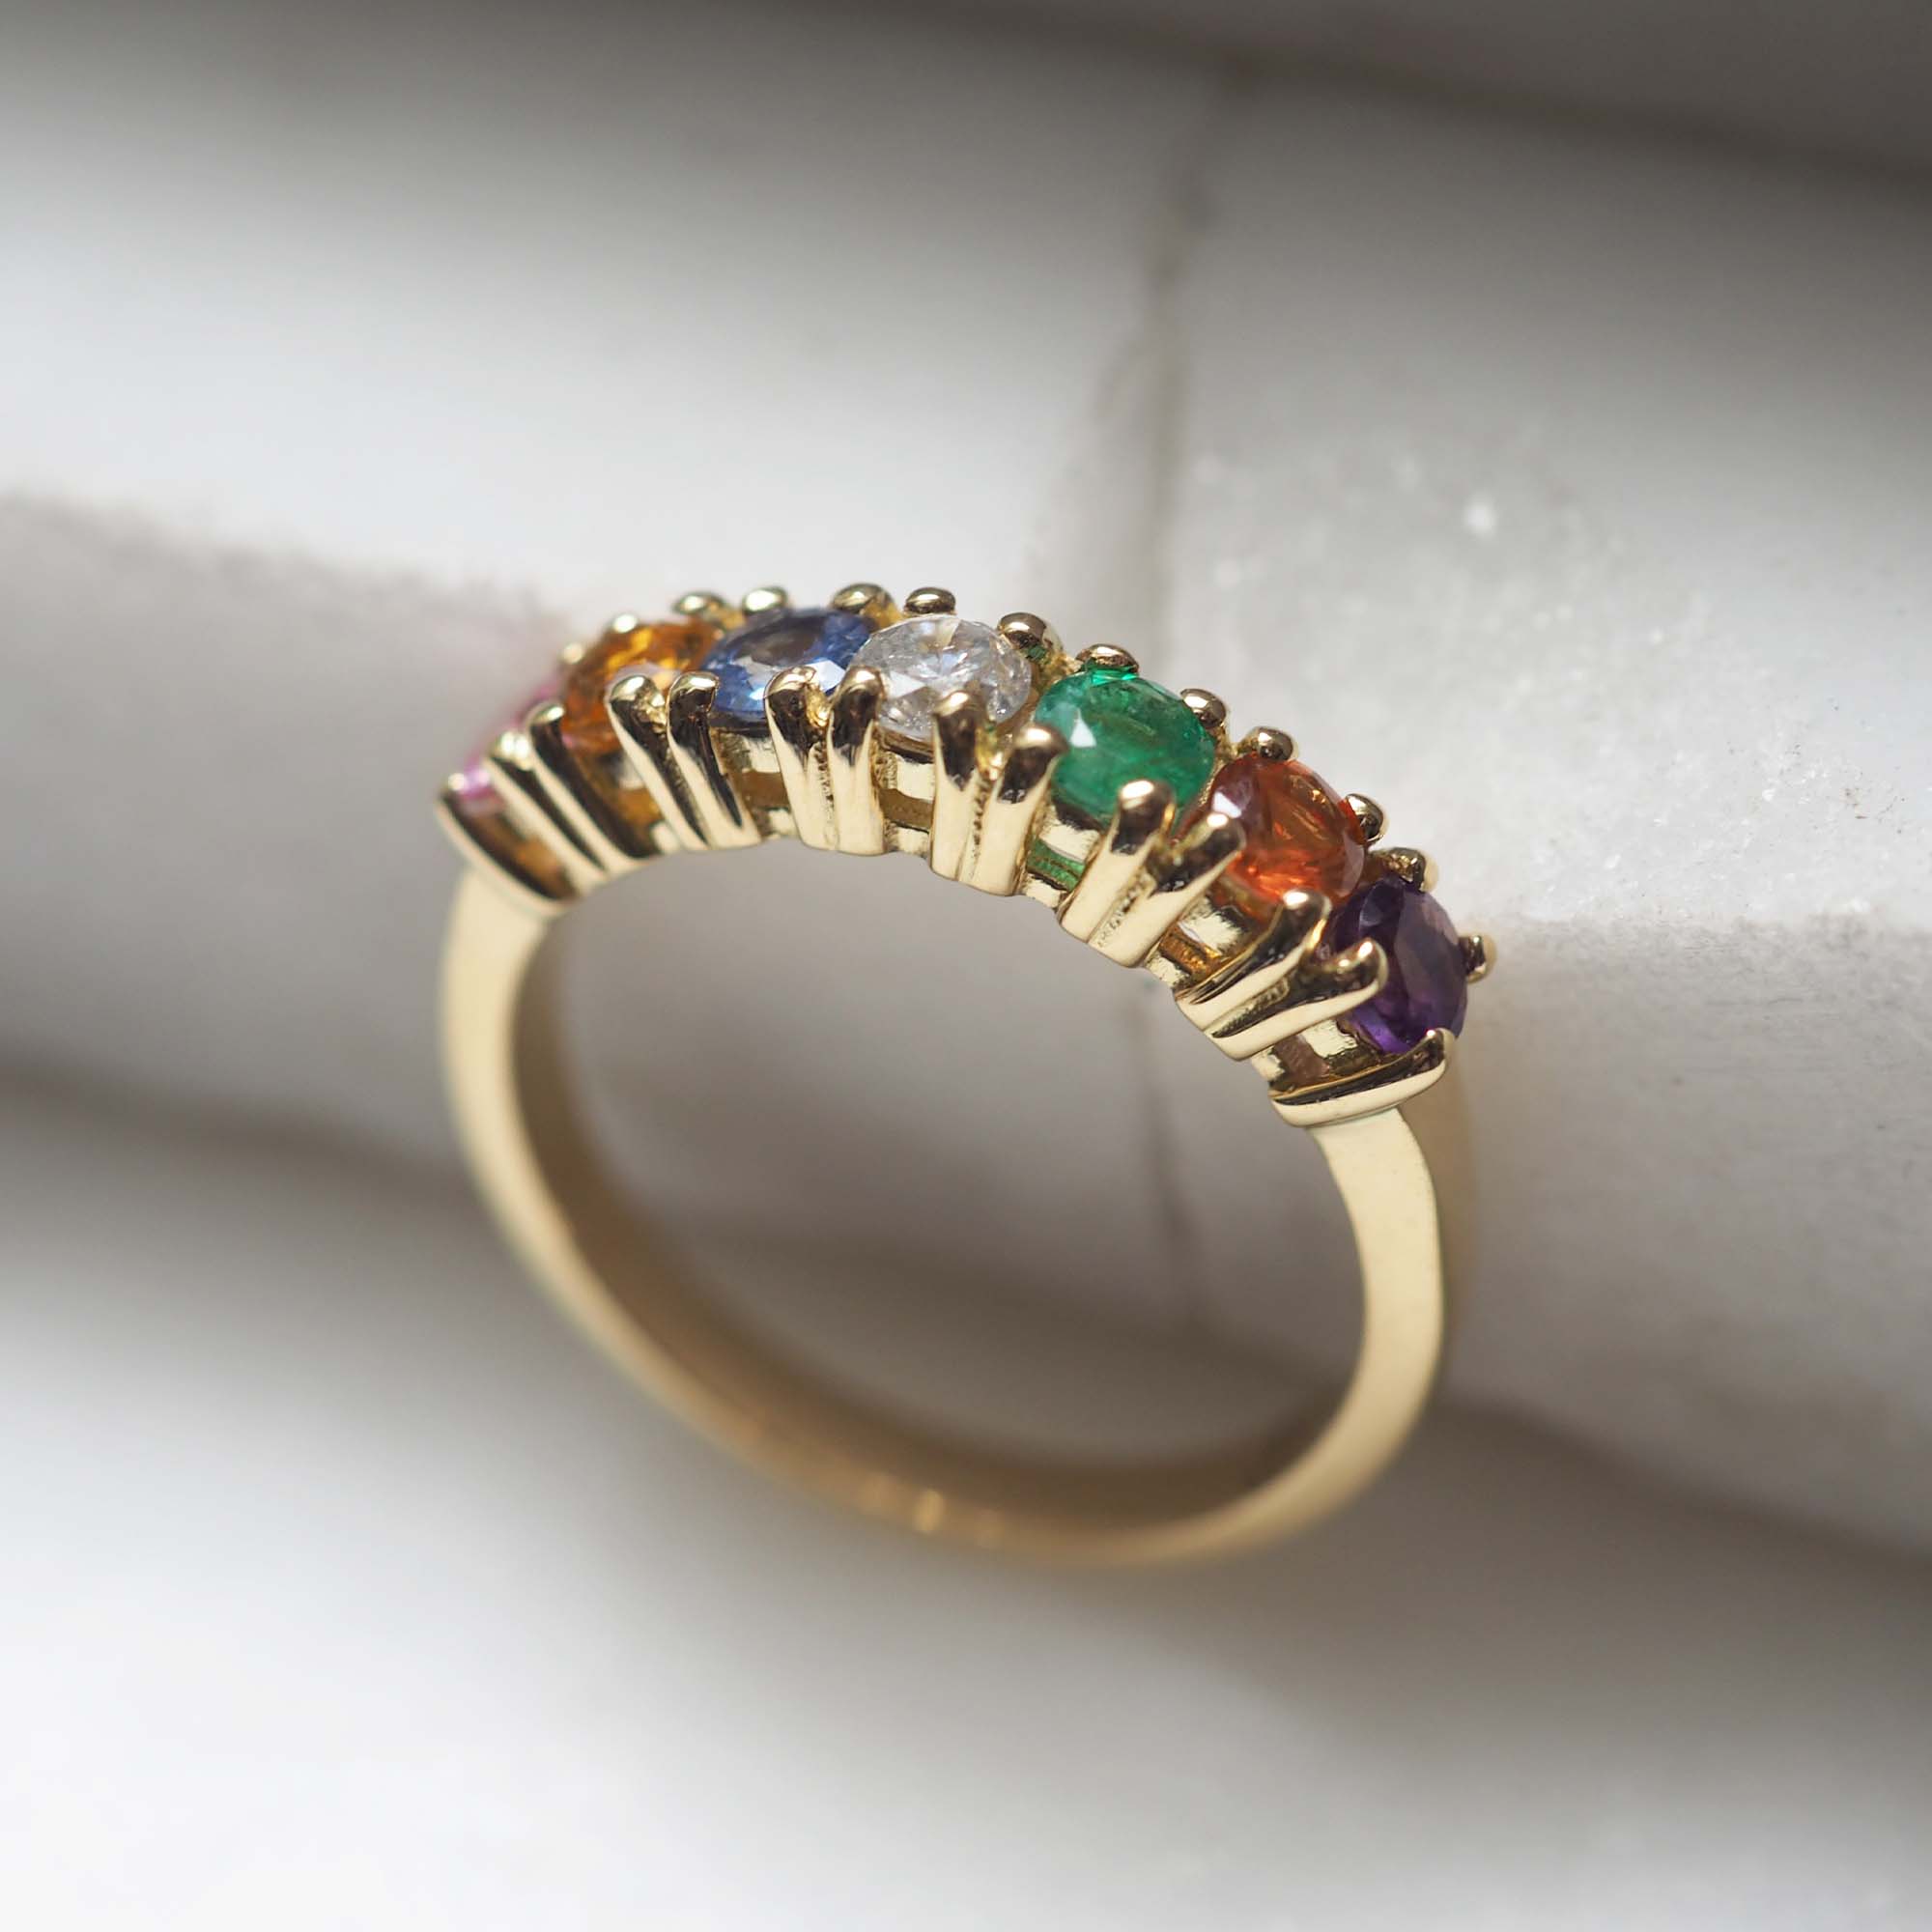 Confetti Engagement Ring by Yasmin Everley